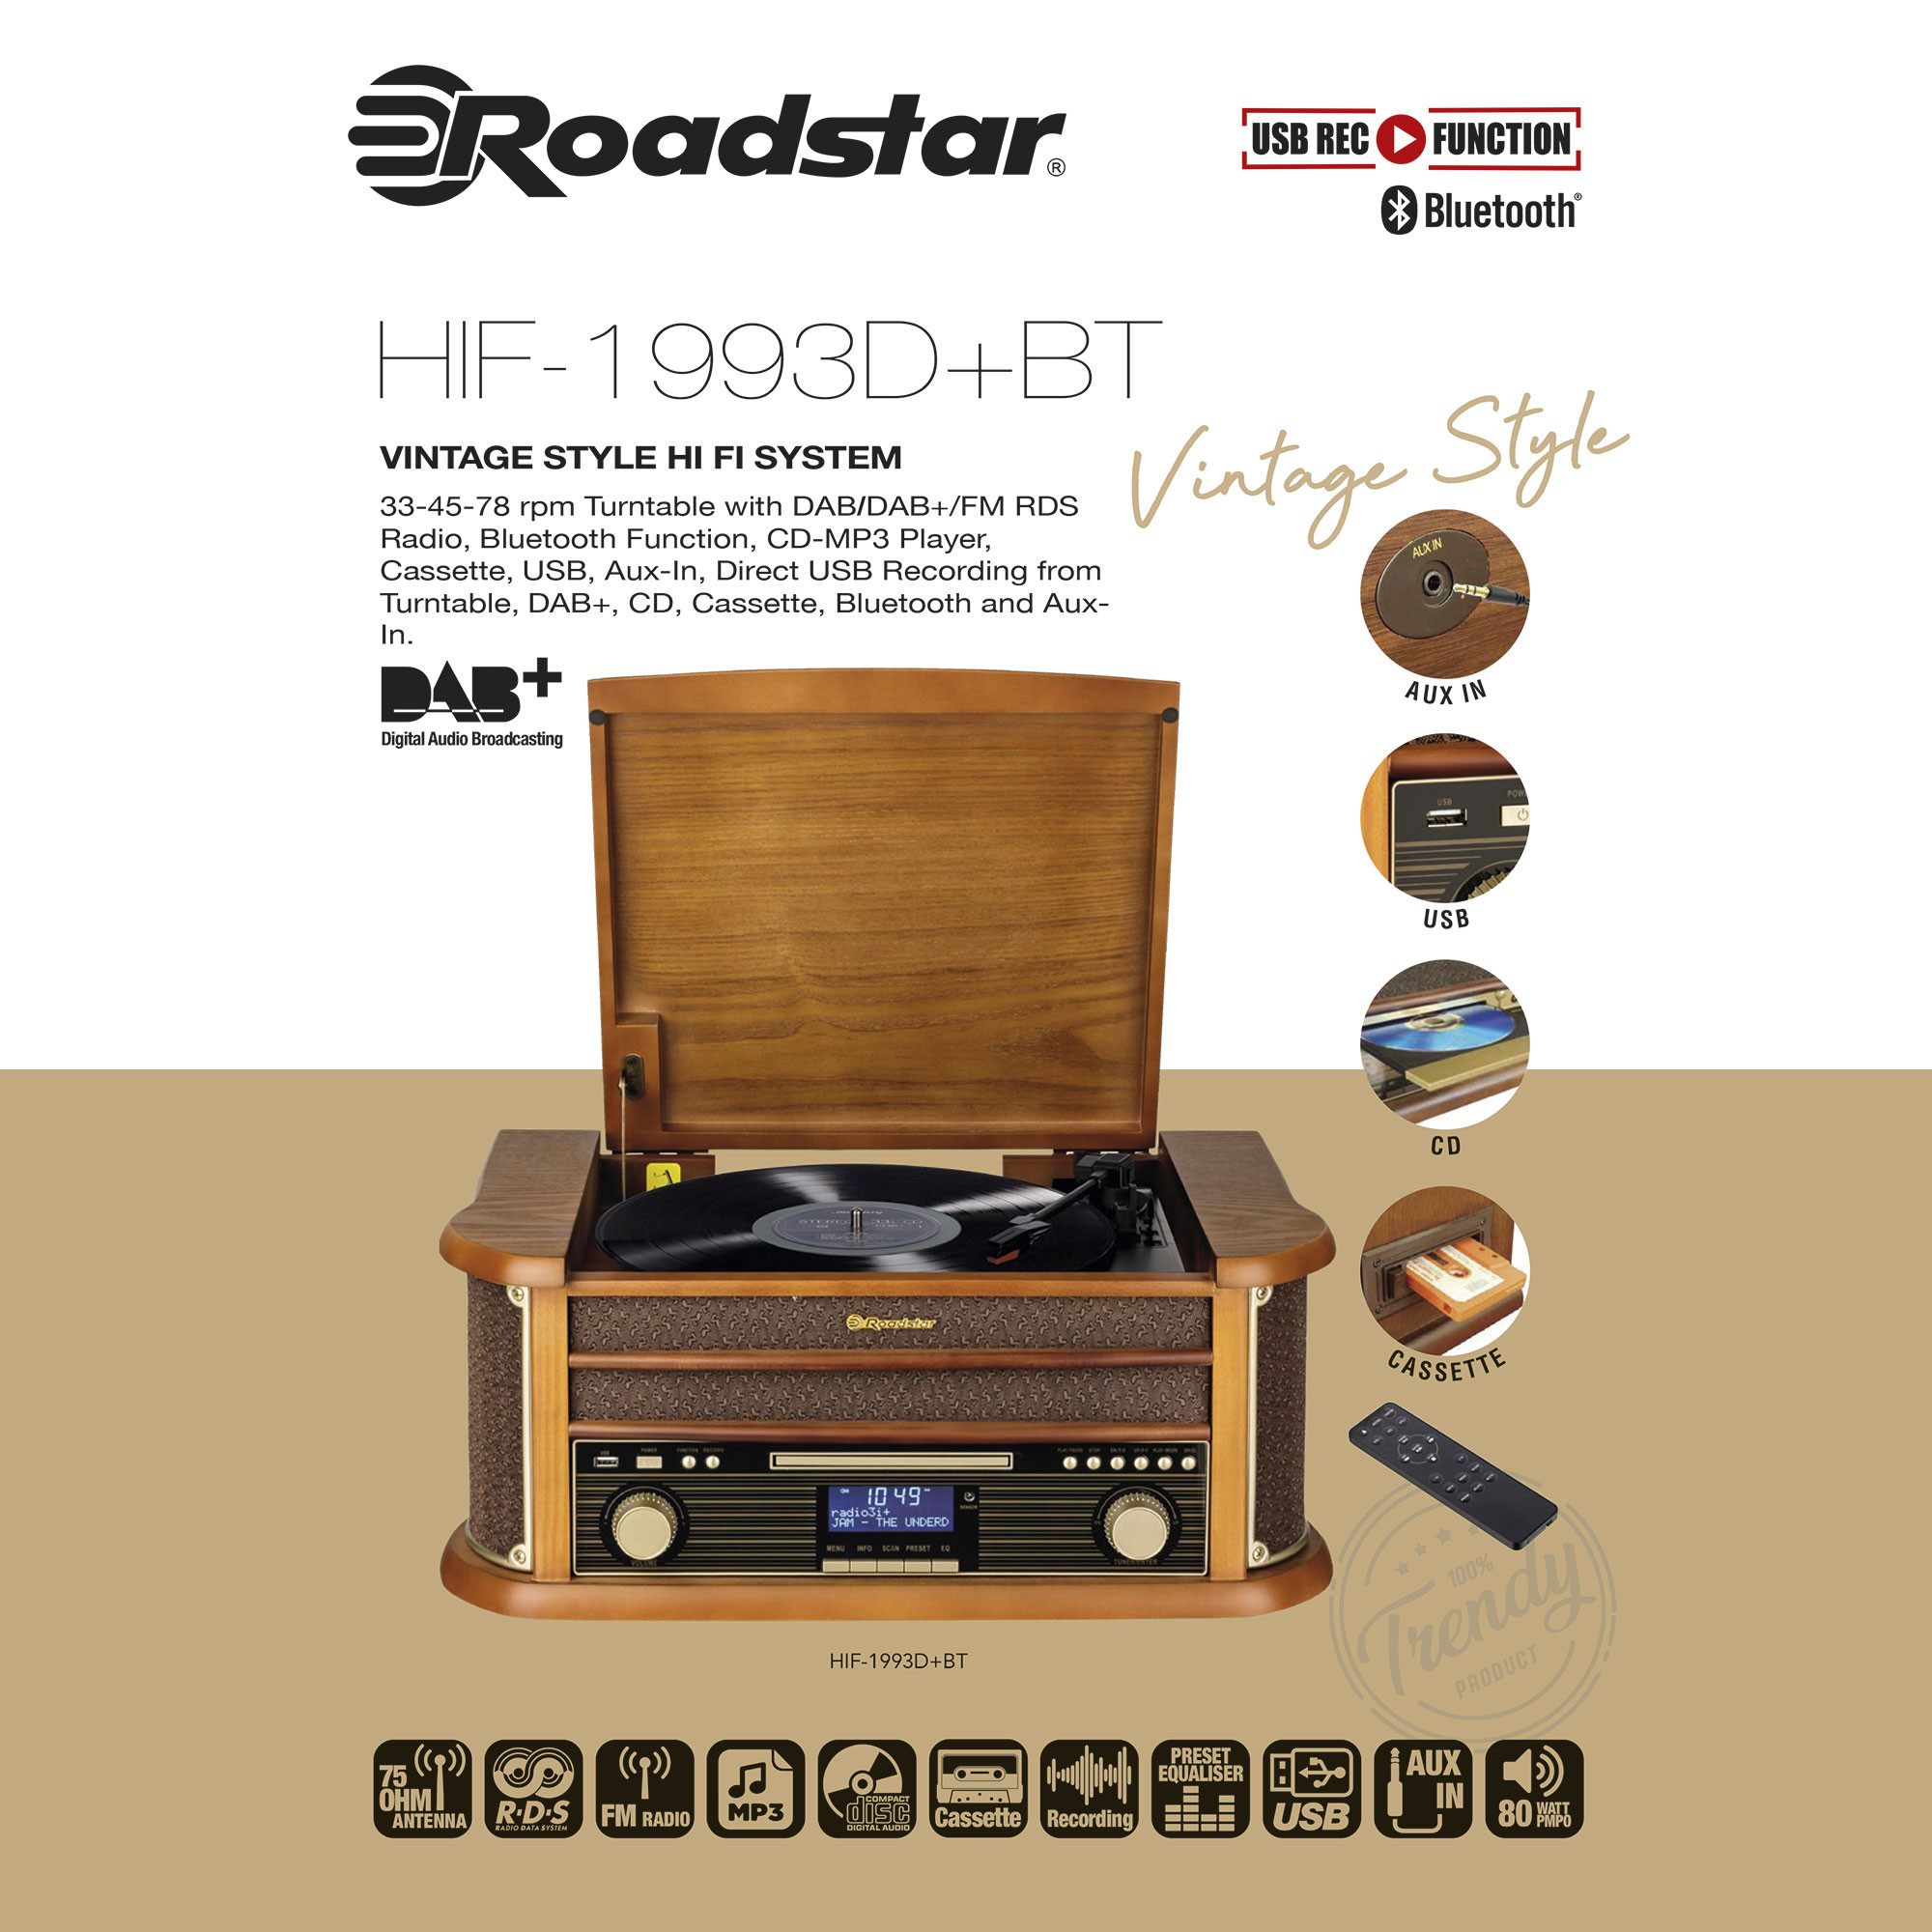 Roadstar HIF-1996BT Tocadiscos de Vinilo Vintage 33/45/78 rpm